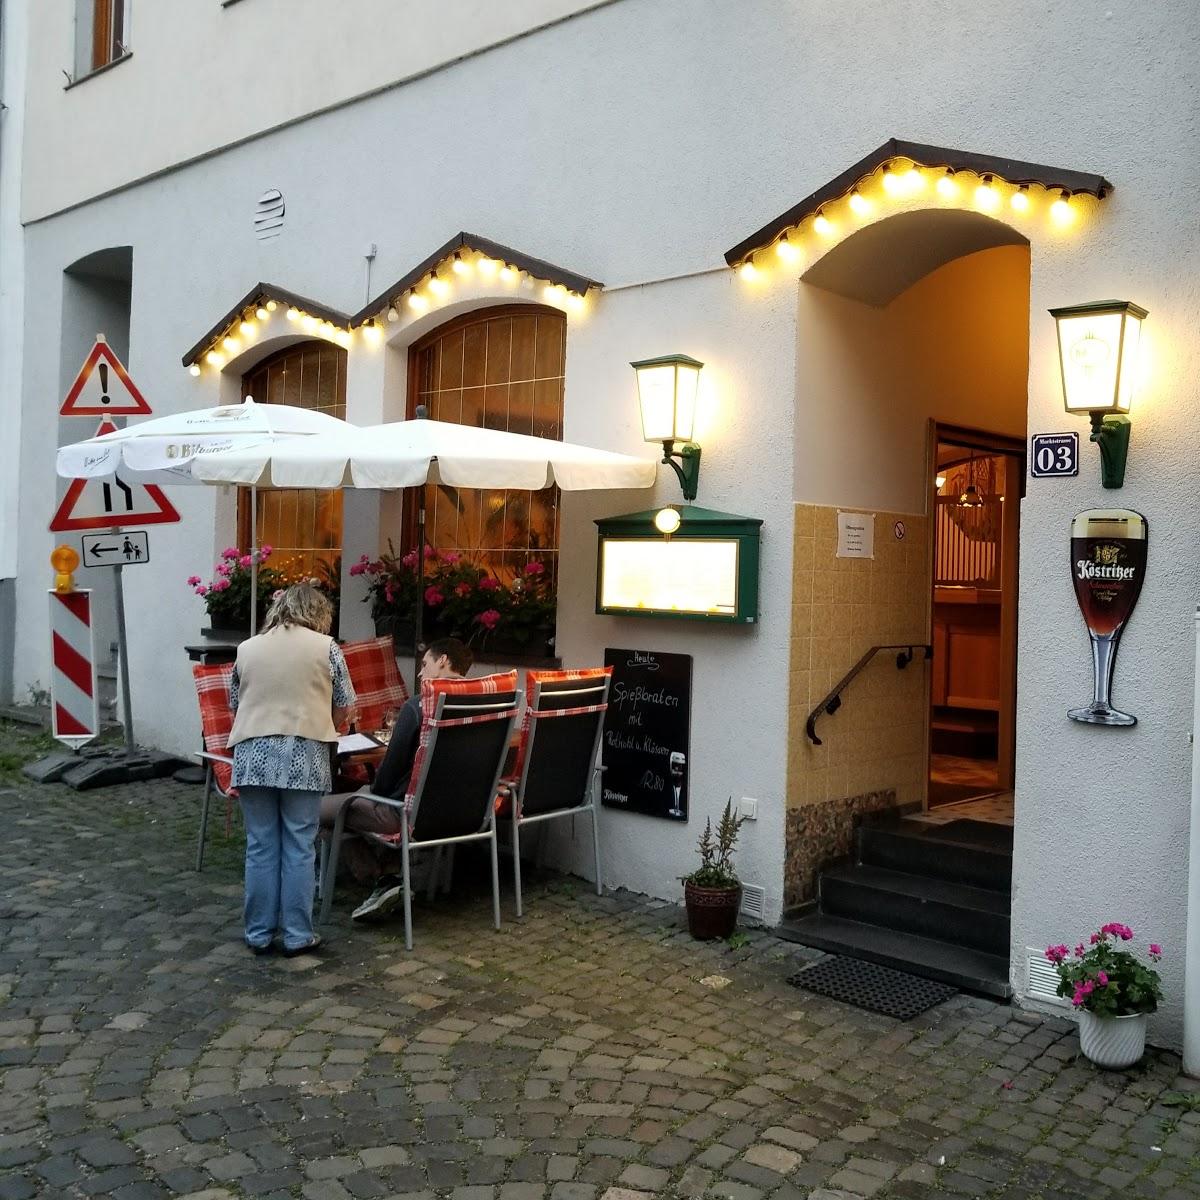 Restaurant "Jägerstube" in  Bacharach